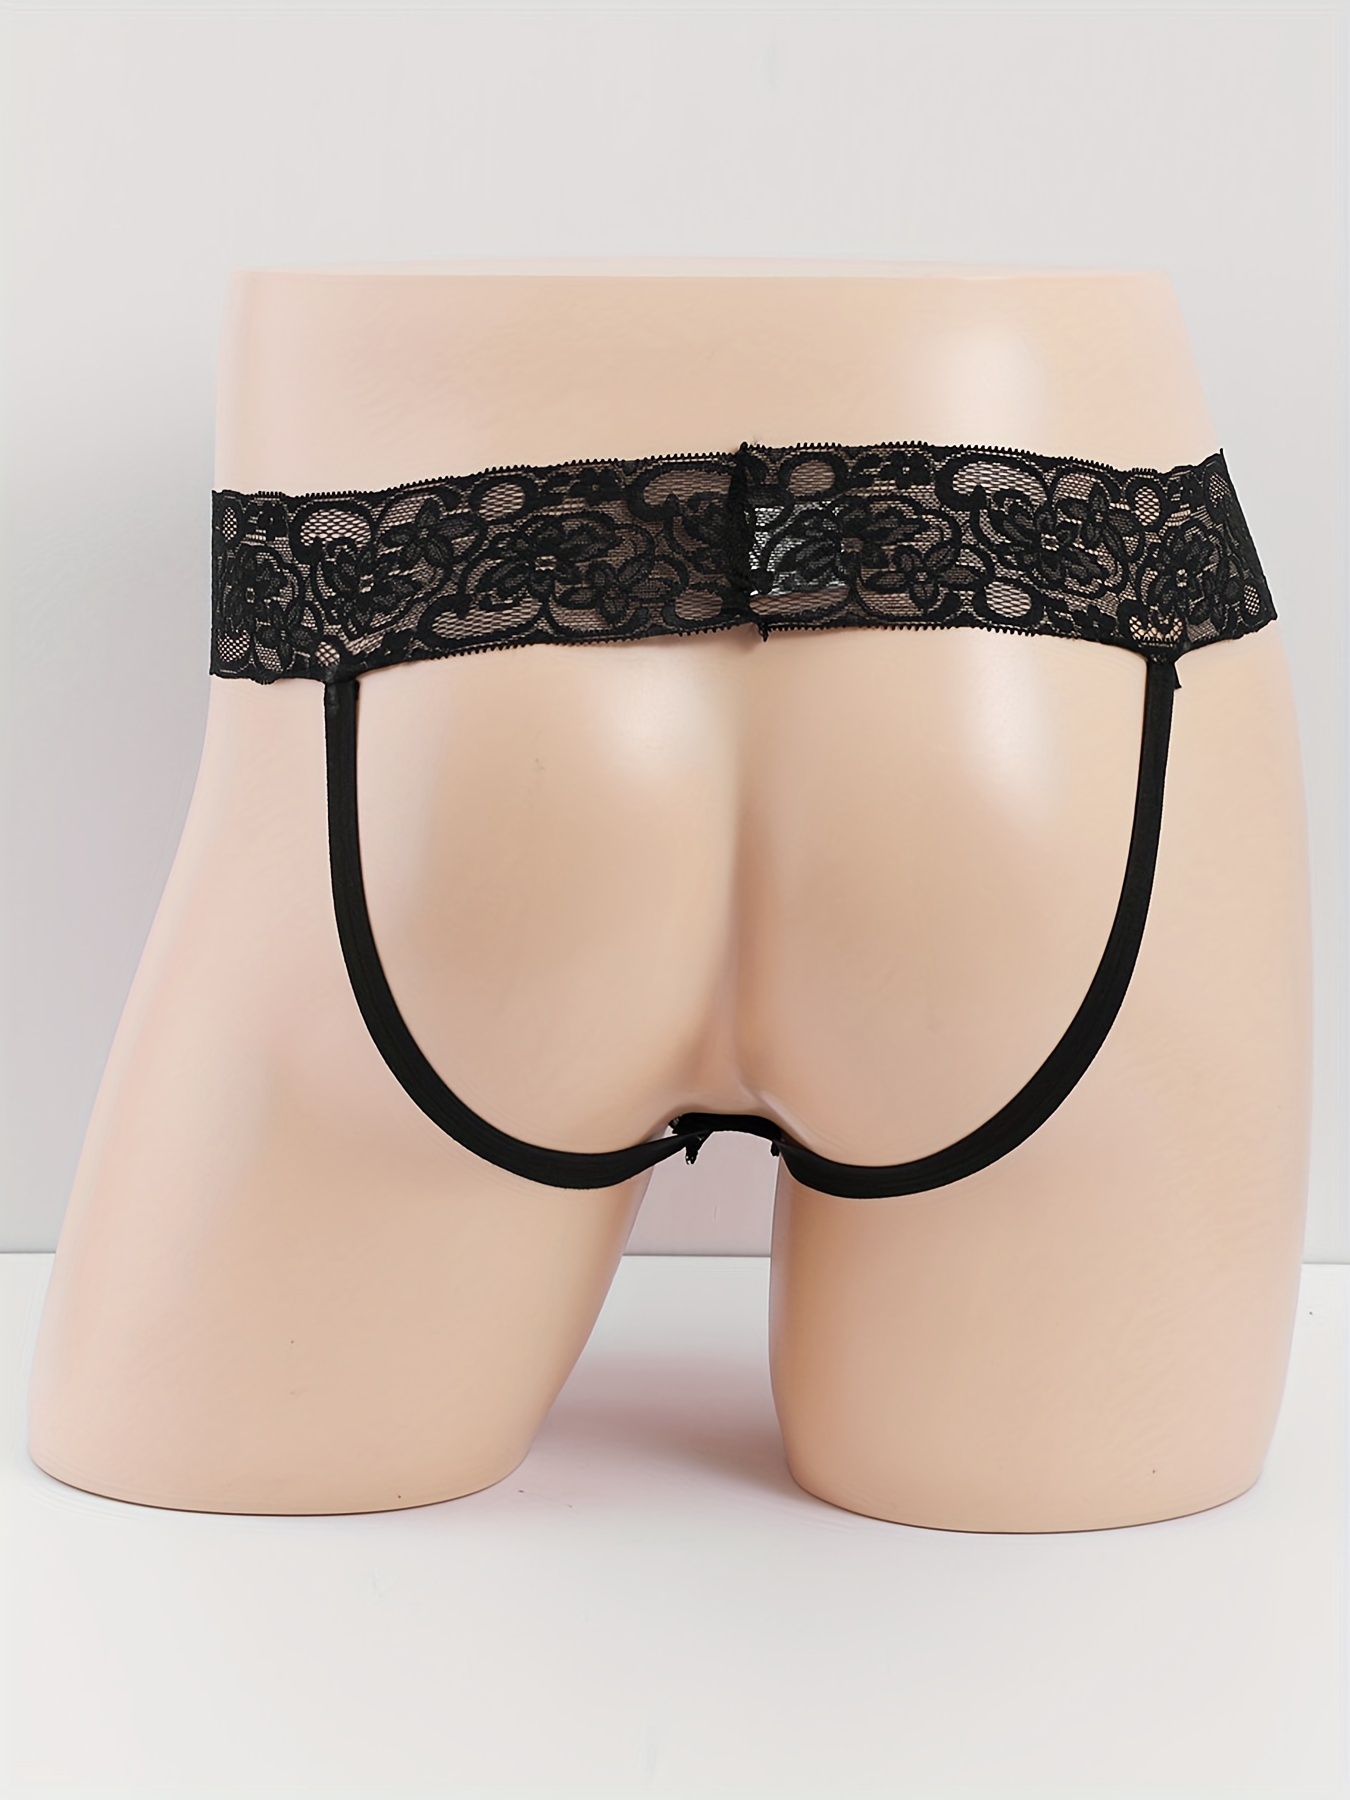  Women Mesh Thong Ultra Thin Soft Lace G-String Panties